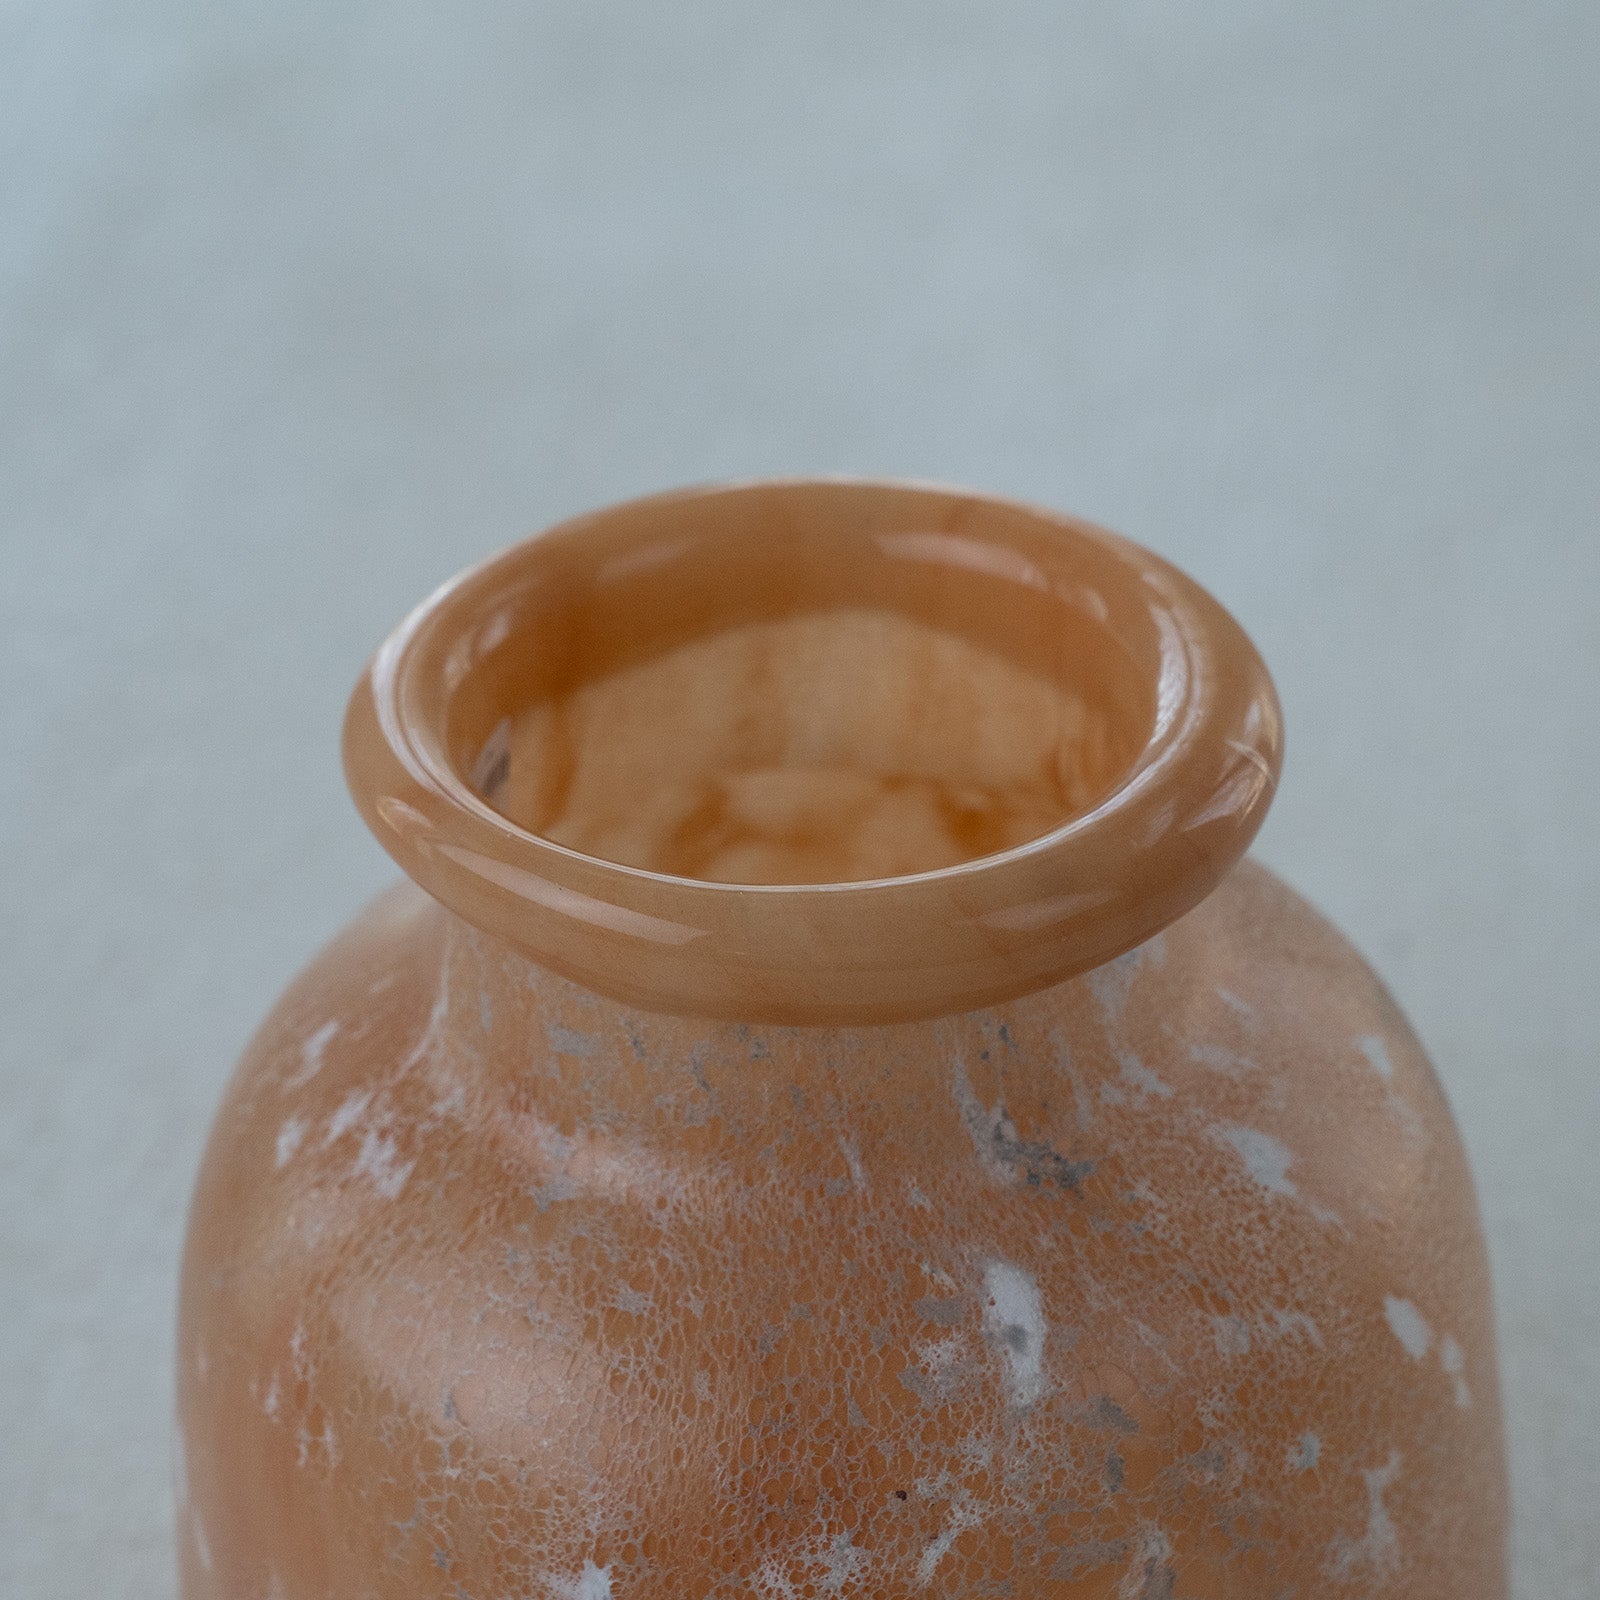 Peach and Cream Round Decorative Glass Vase Open Top - 23RXAU118  - WS Living - UAE - Vase Wood and steel Furnitures - Dubai